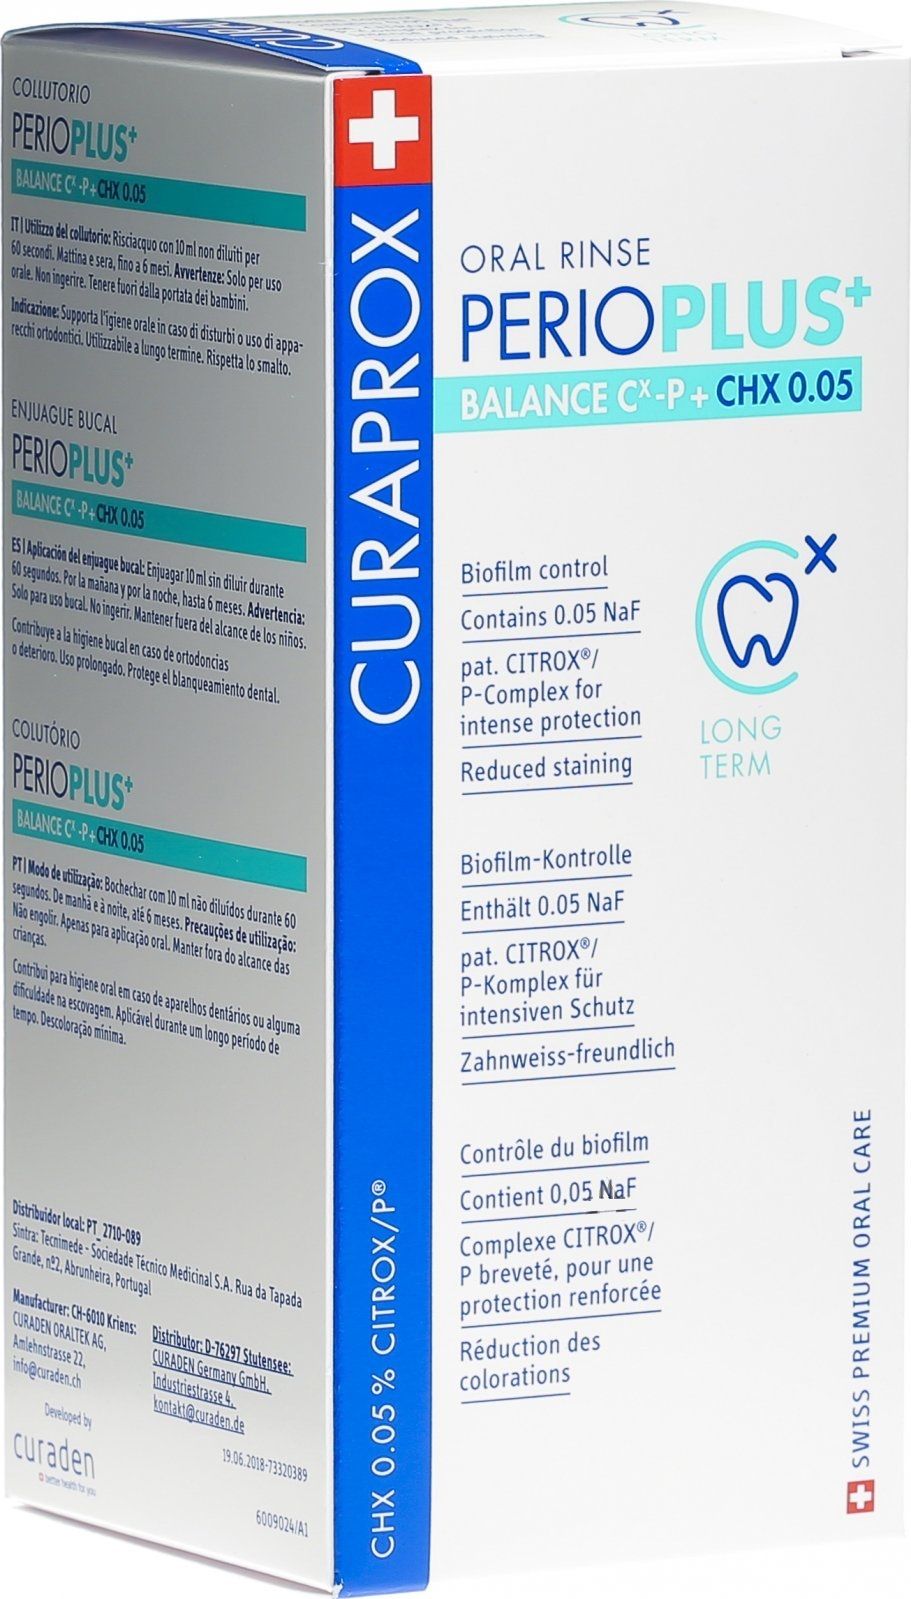 Curaprox Perio Plus Balance CHX 0,05% 200 ml